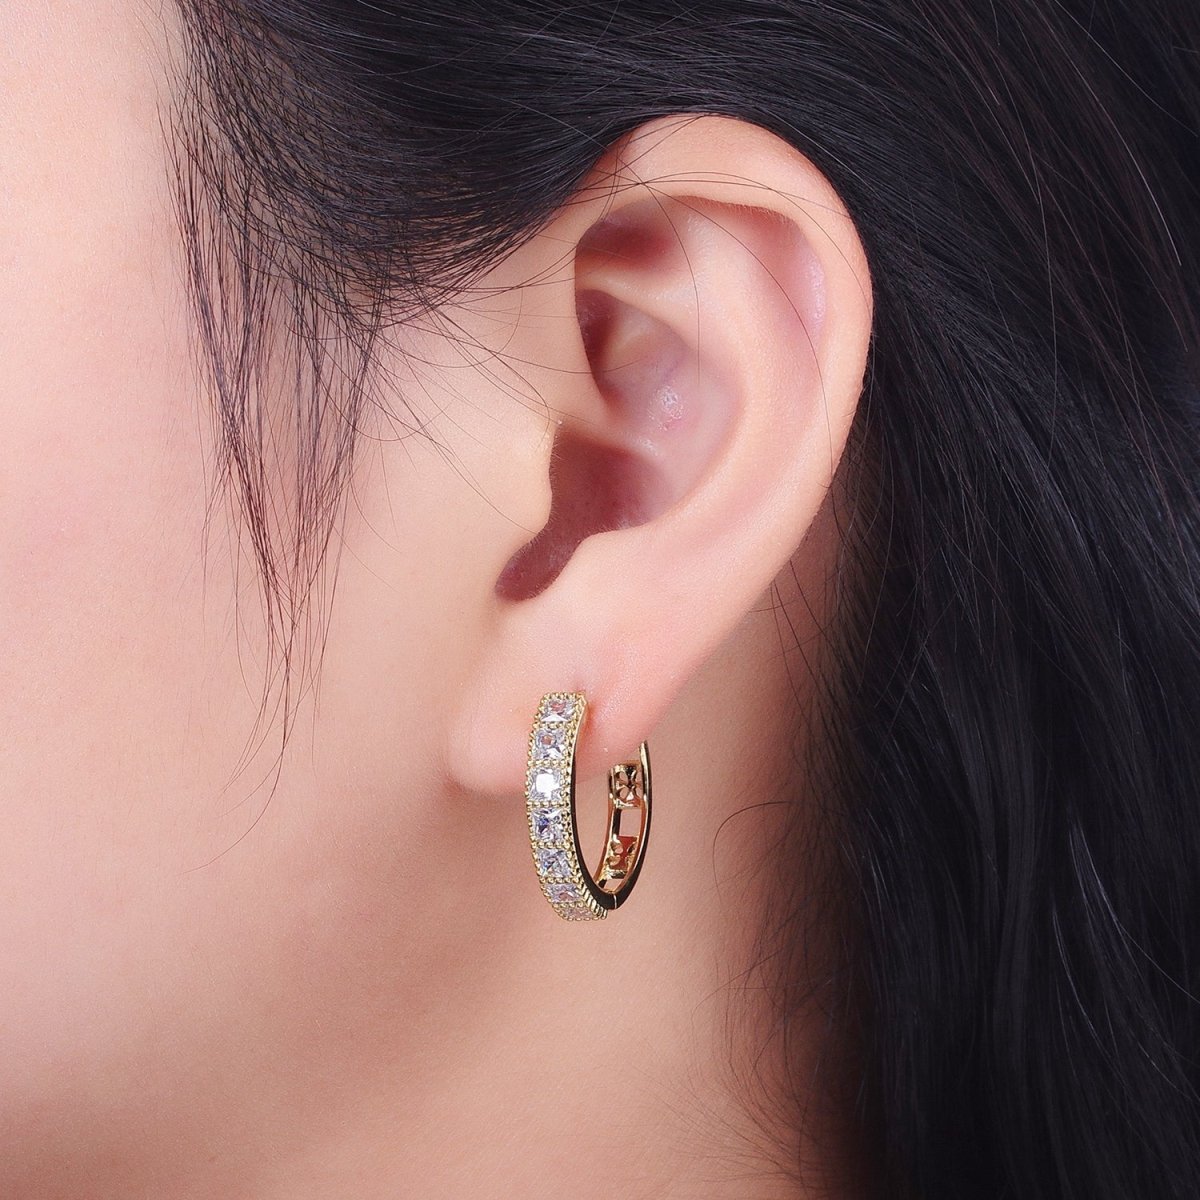 14K Gold Filled Square Baguette Lined 22mm Huggie Hoops Earrings | V-022 - DLUXCA